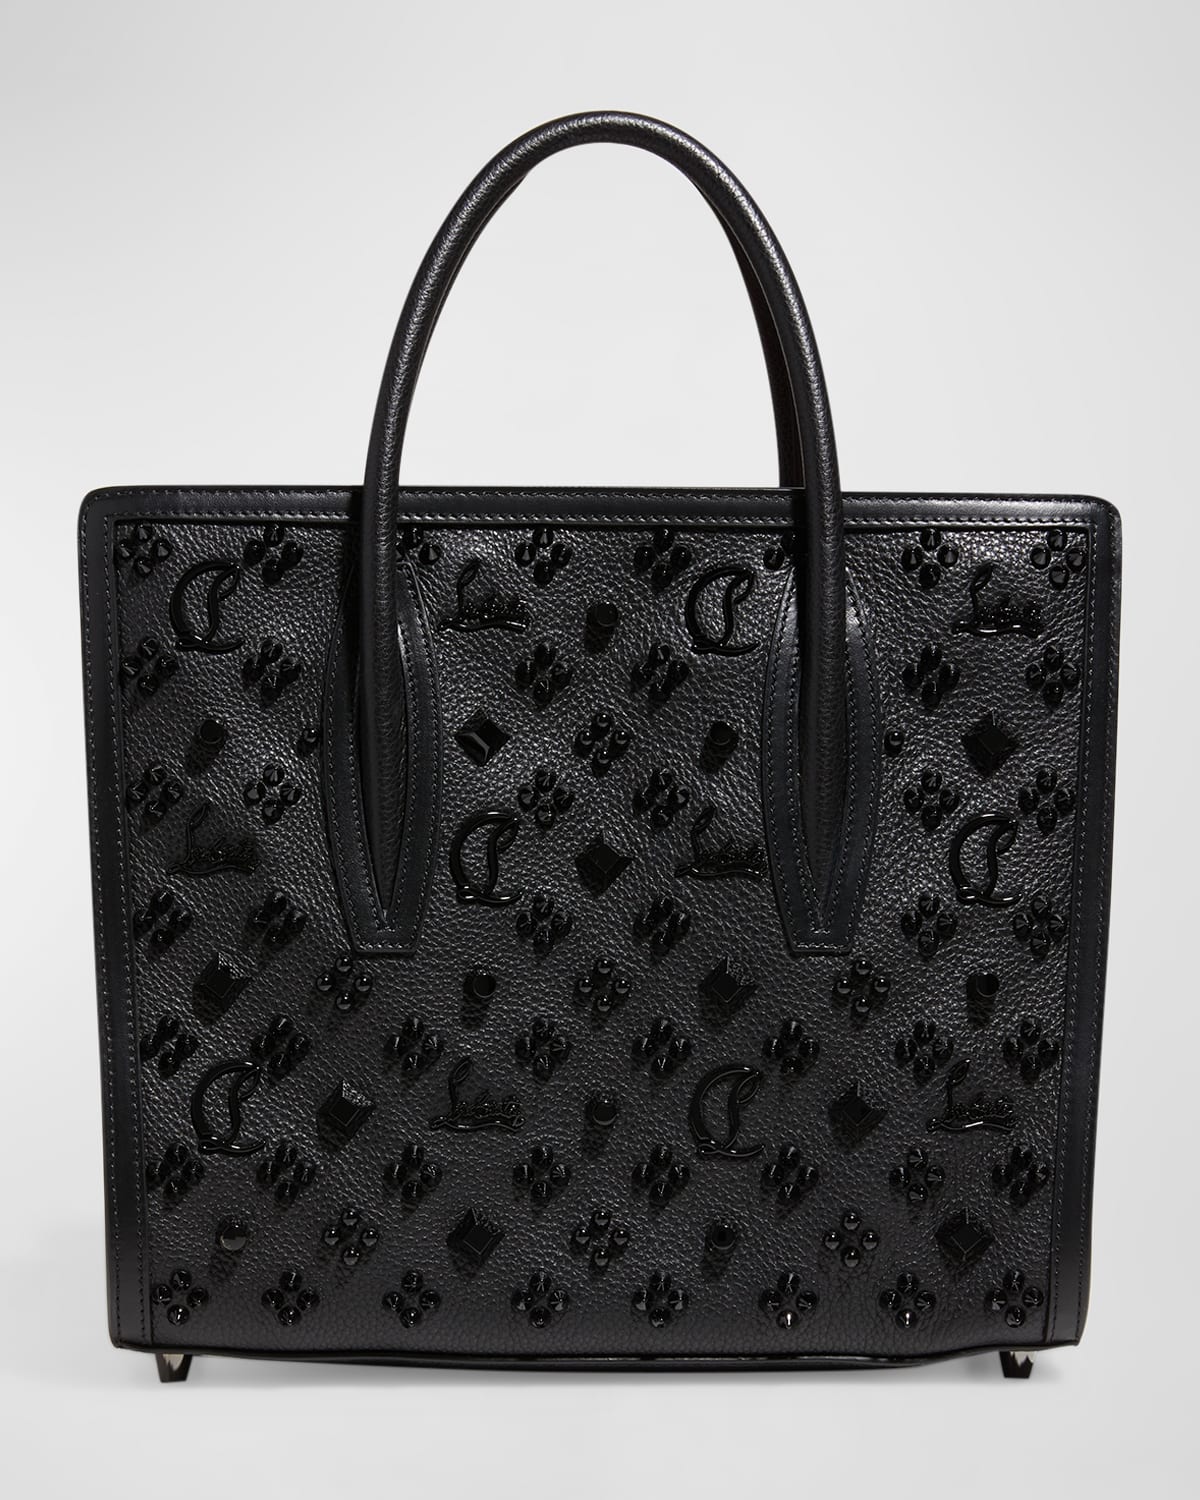 Women's Bag Lambskin Real Leather Studded Black Luxury Shoulder&Shopper Handbag 